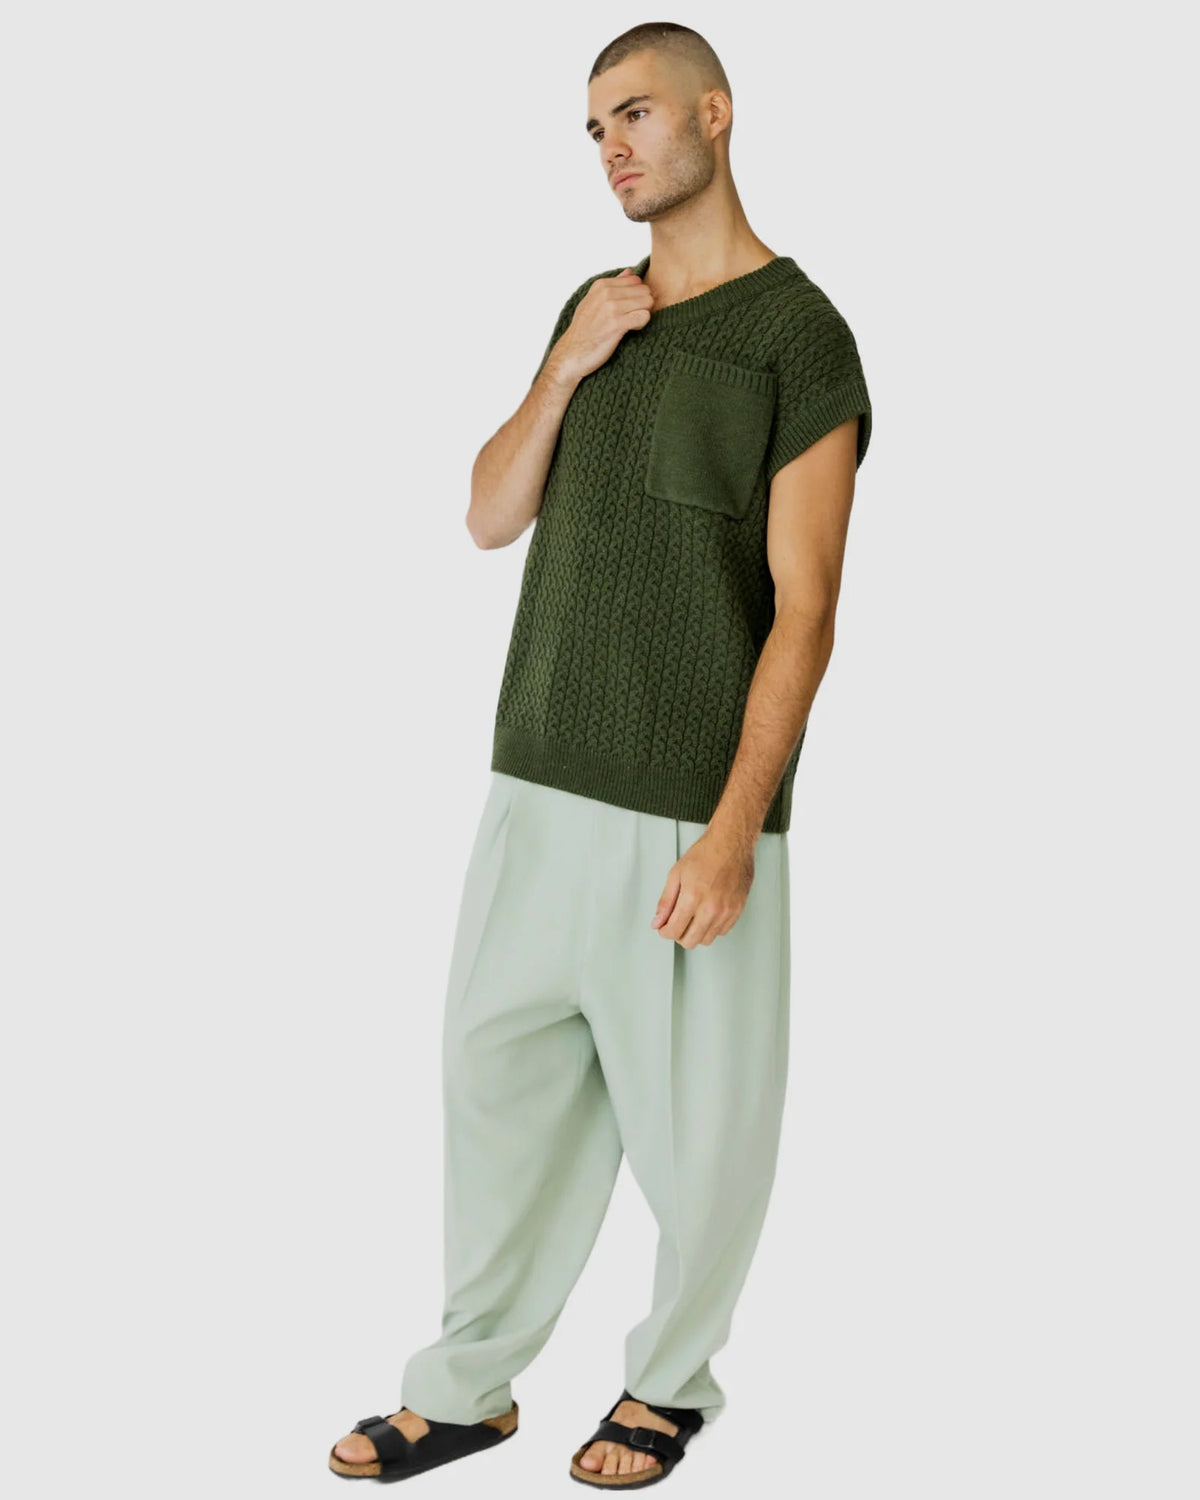 Justin Cassin Mateo Pocket Knitted Vest in Green Color 2